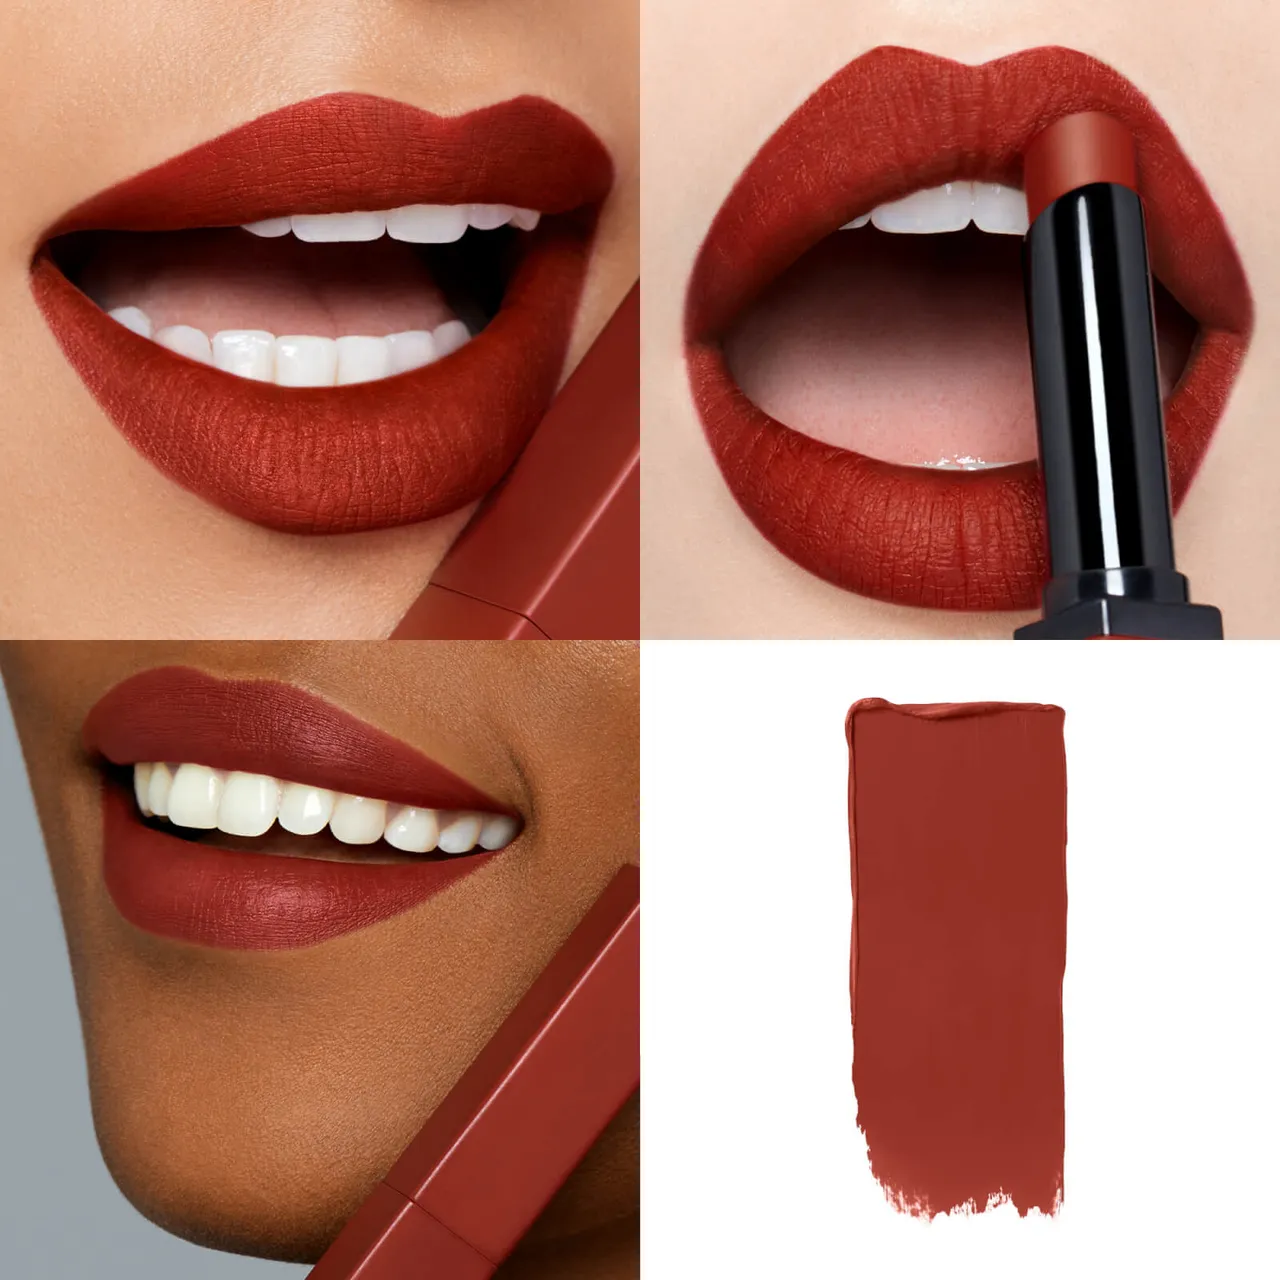 NARS Powermatte Lipstick 1.5g (Various Shades) - Mogador